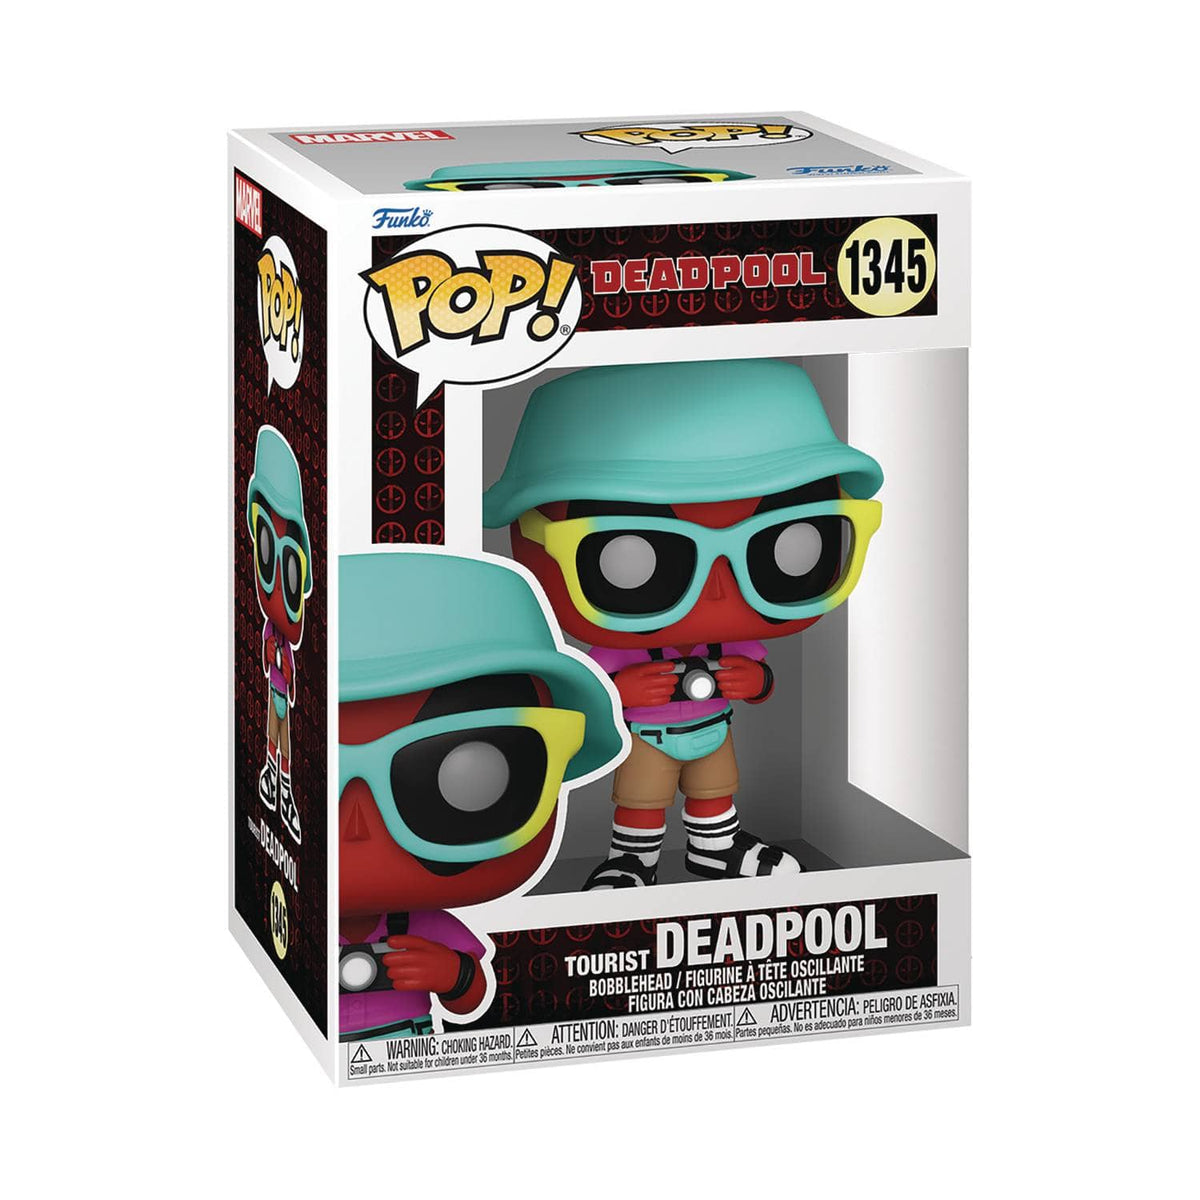 Funko Pop!: Marvel - Deadpool, Tourist